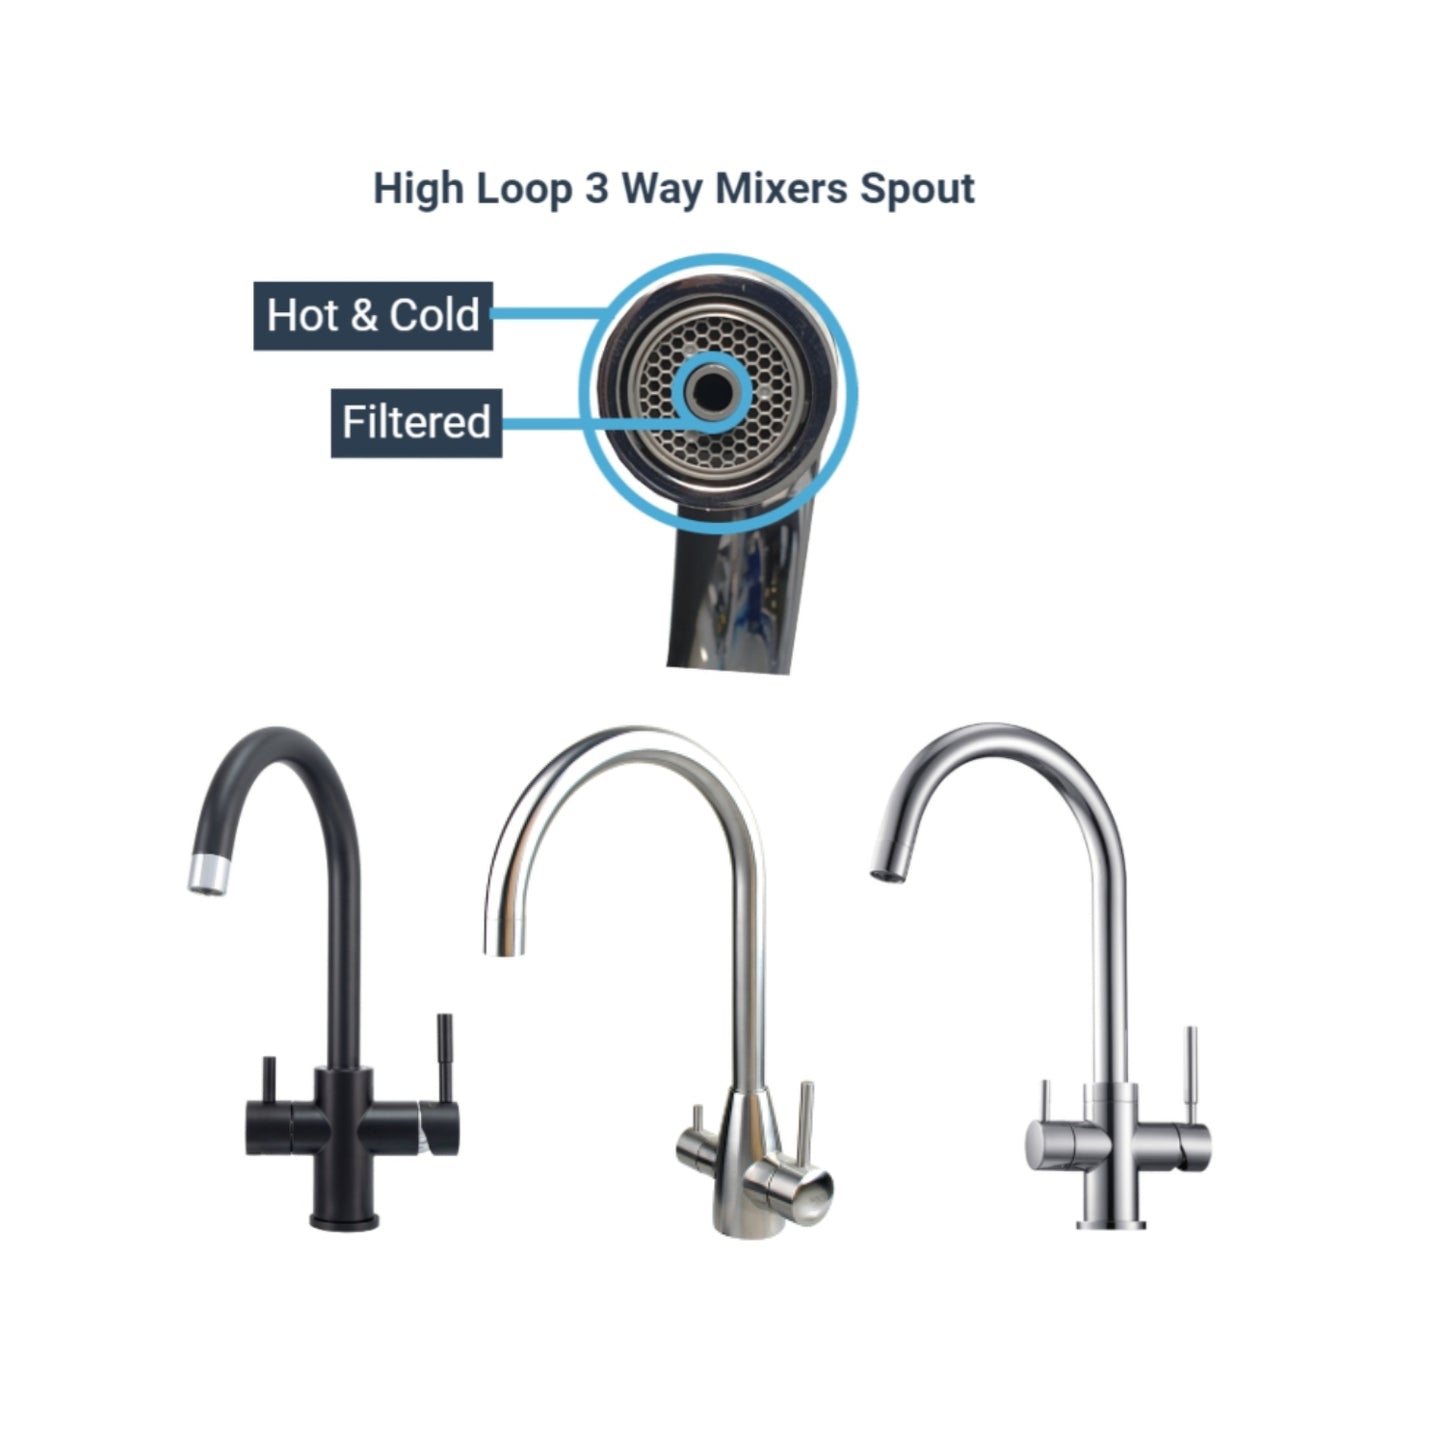 AquaCo Stainless Steel High Loop 3 Way Mixer - Model: 3W-HL-SS